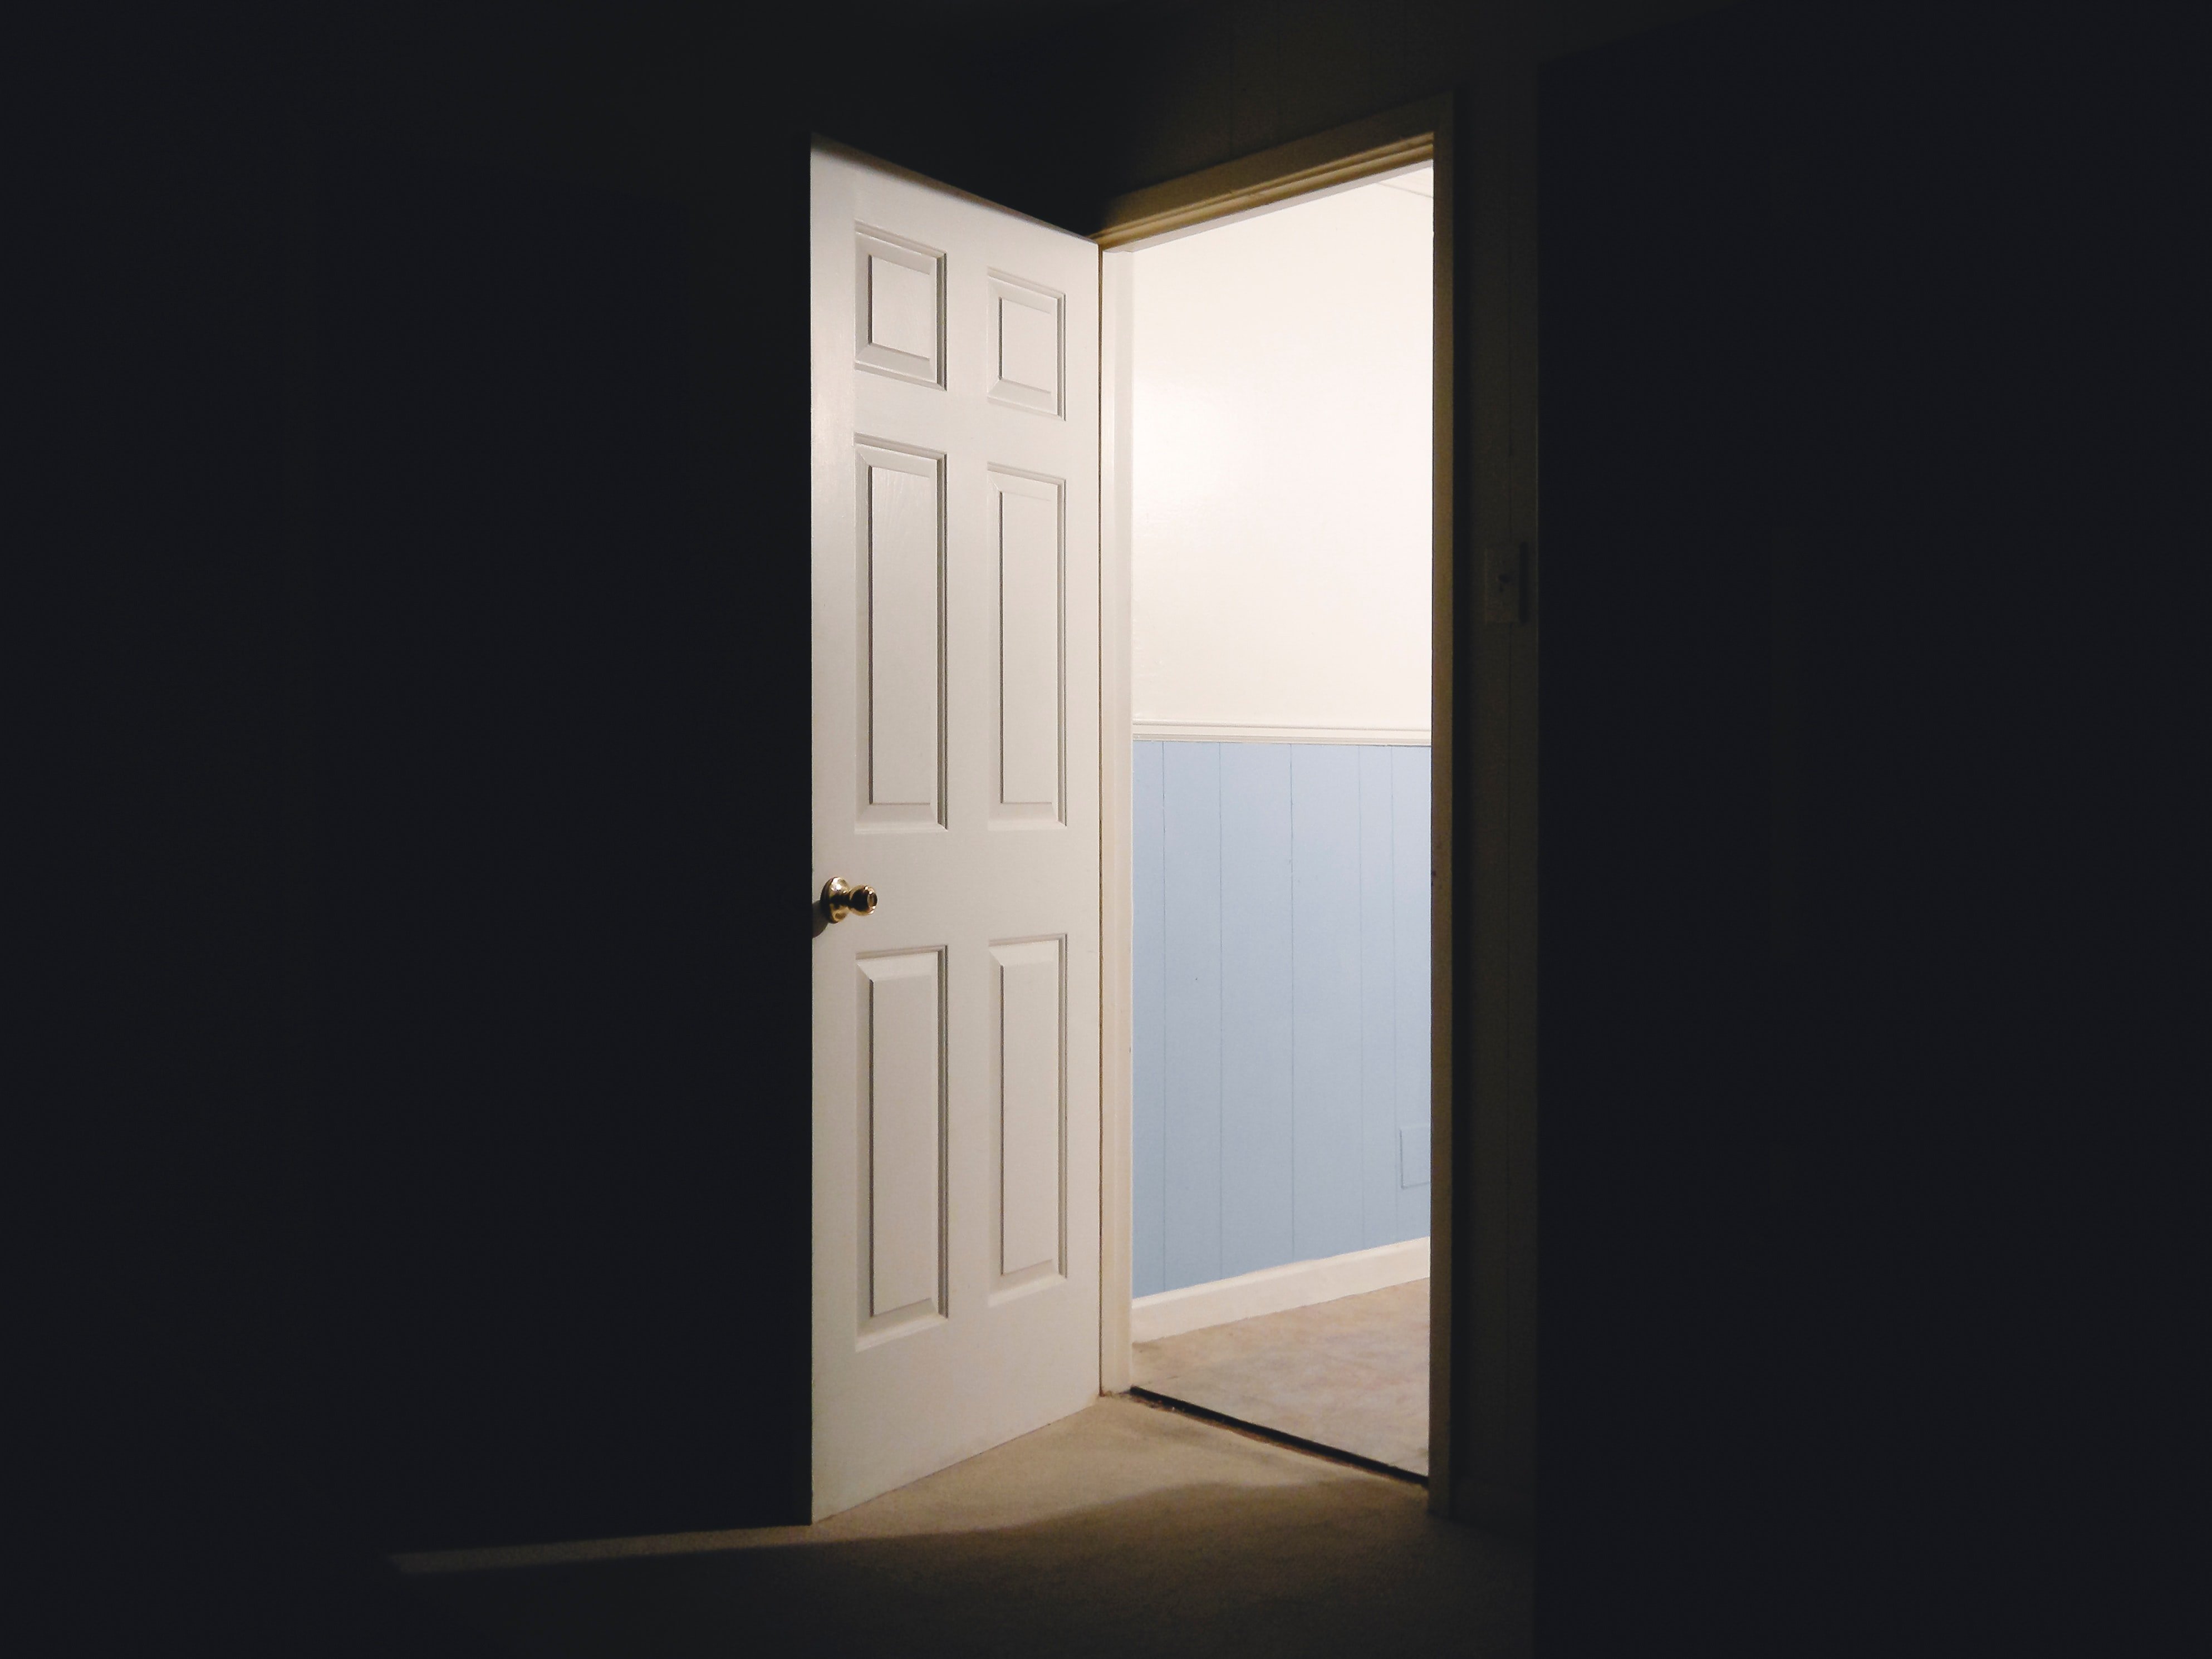 Дверь открывается полностью. Открытая дверь. Дверь открывается. Темная комната с дверью. Приоткрытая дверь в комнату.